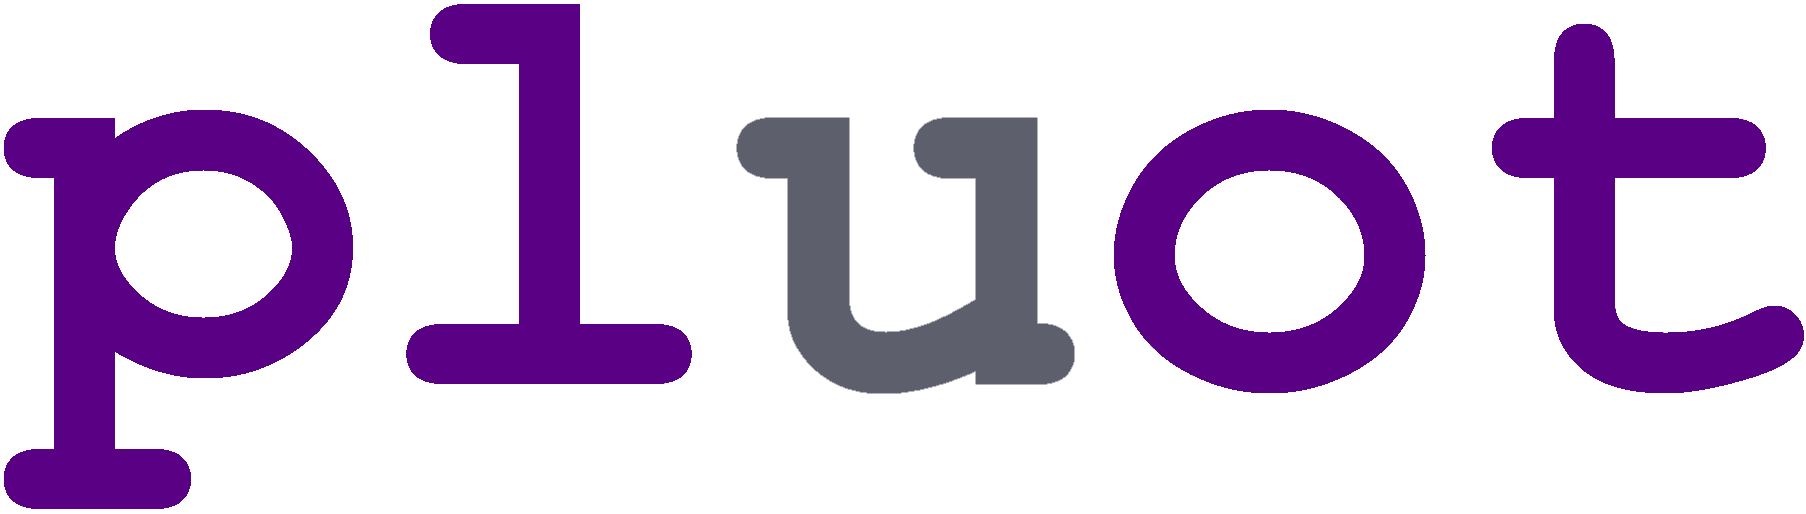 Pluot logo